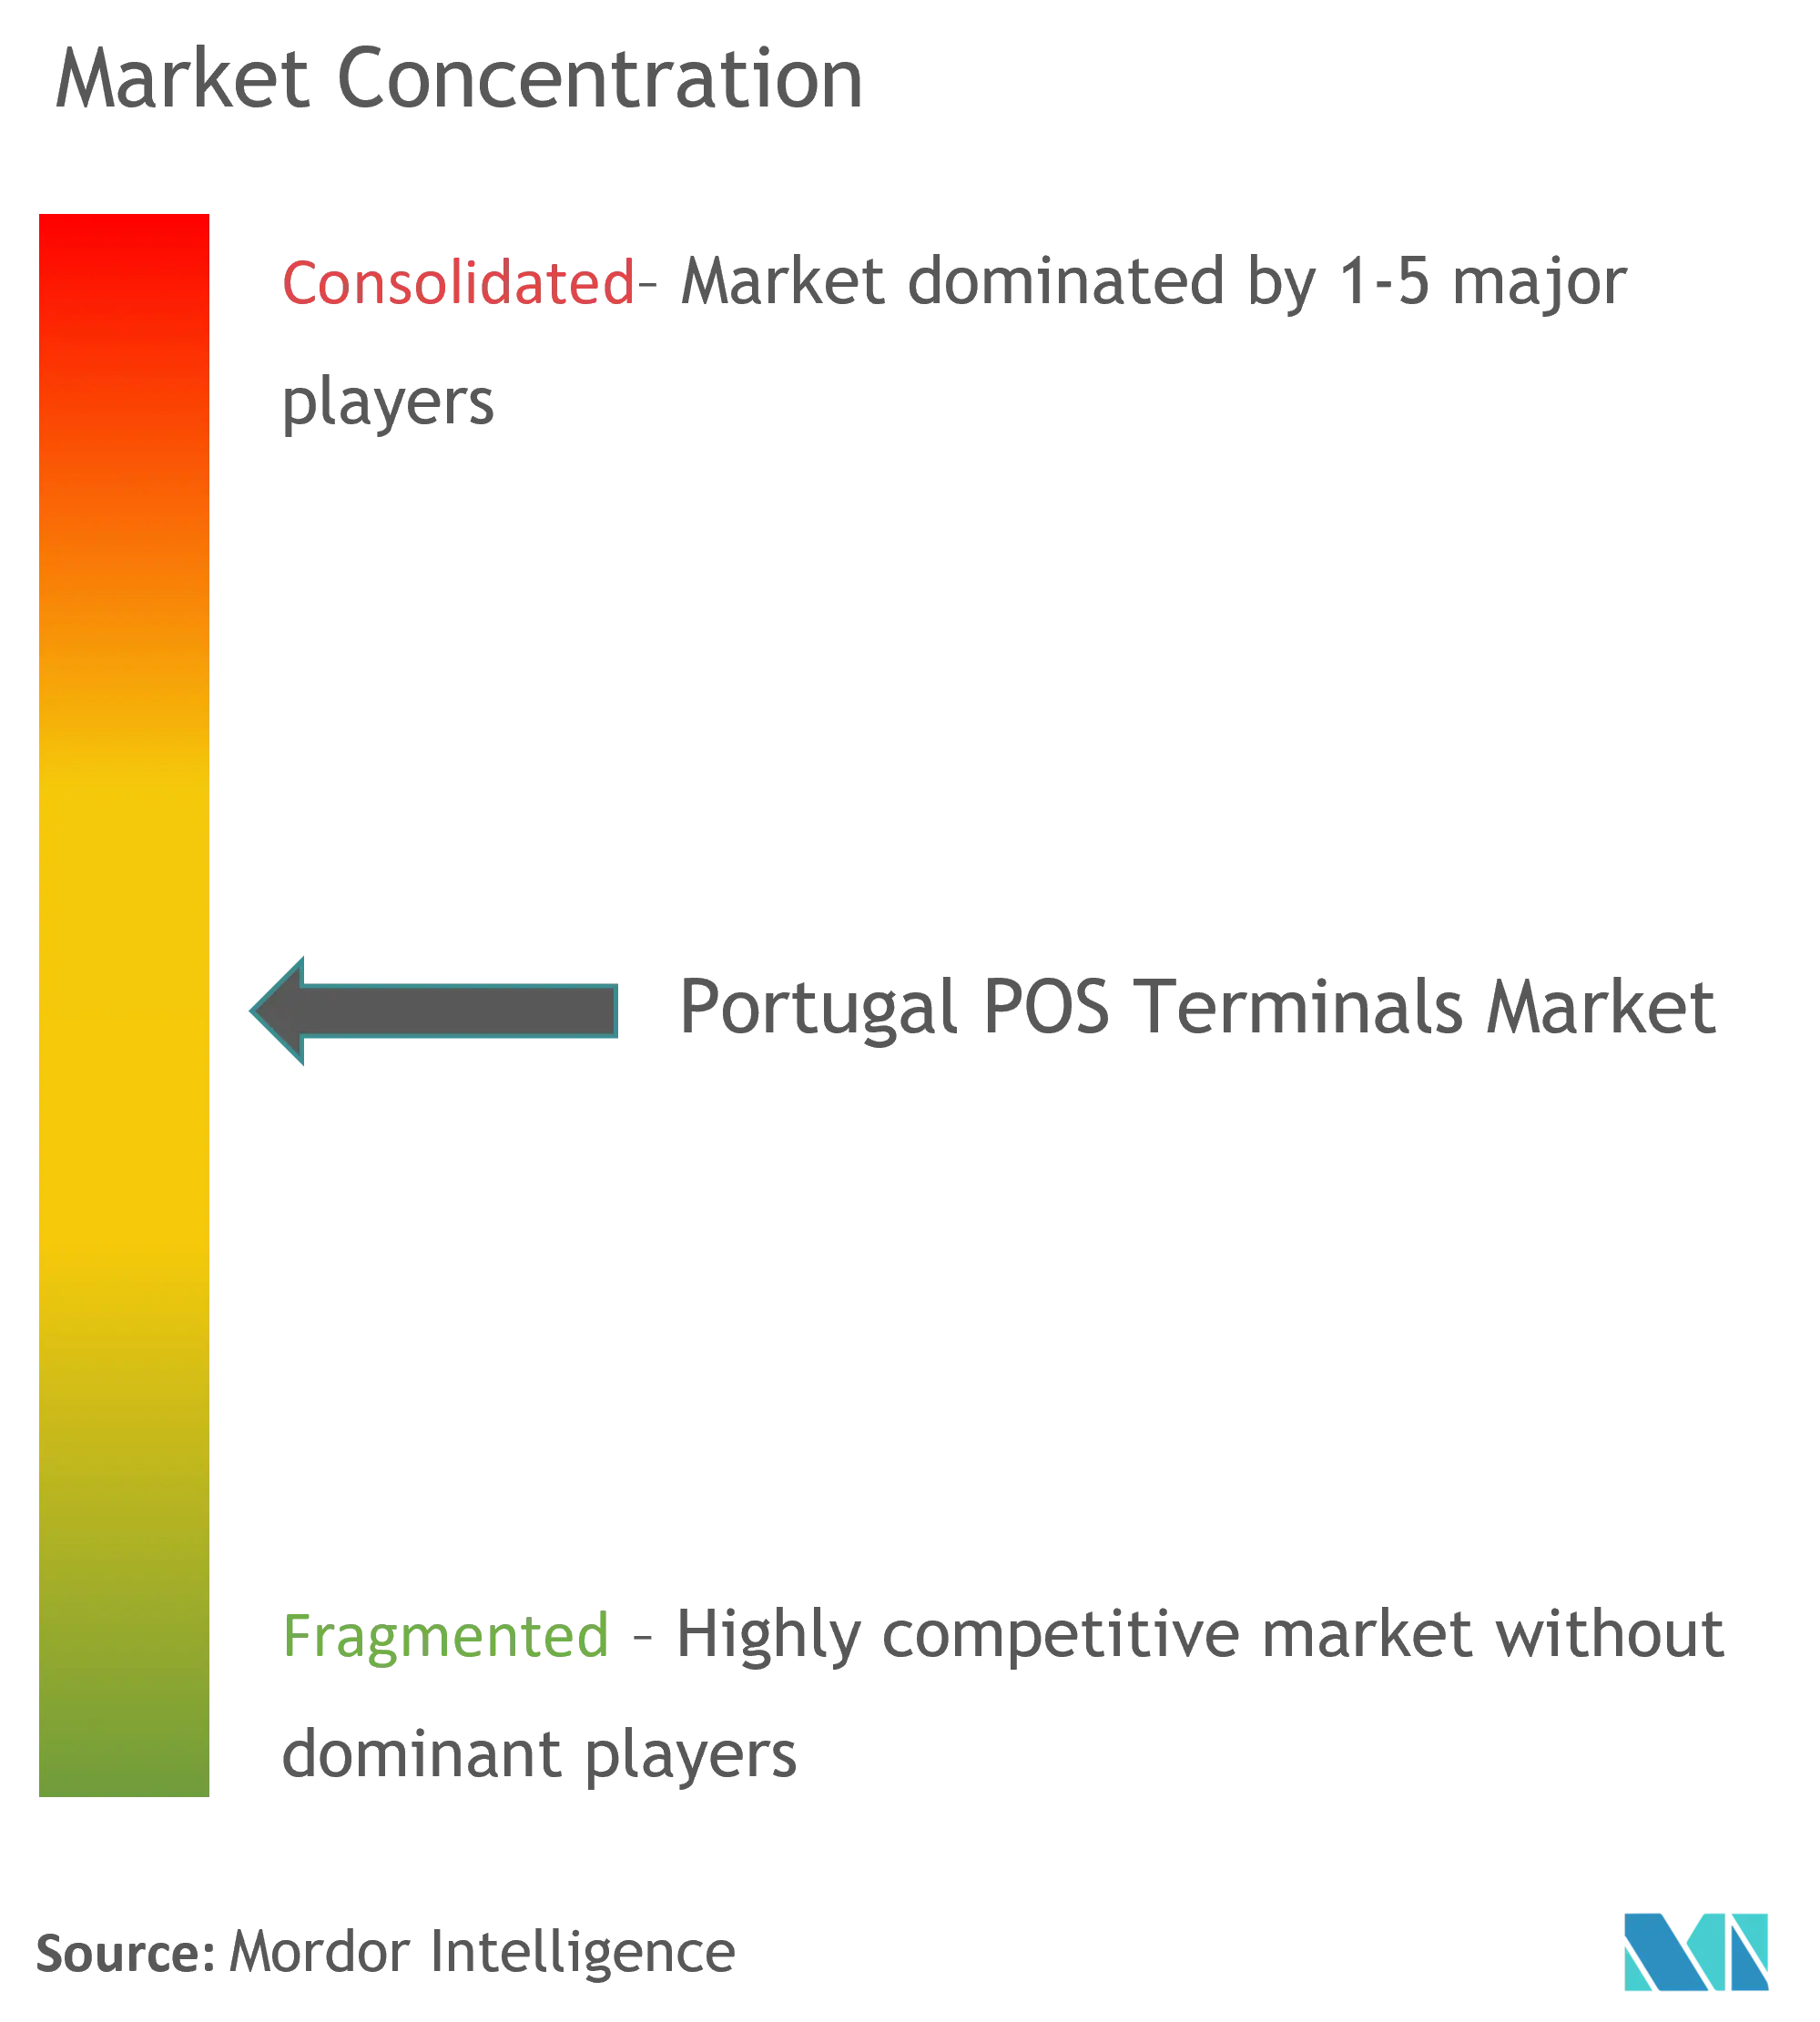 Portugal POS Terminals Market Concentration